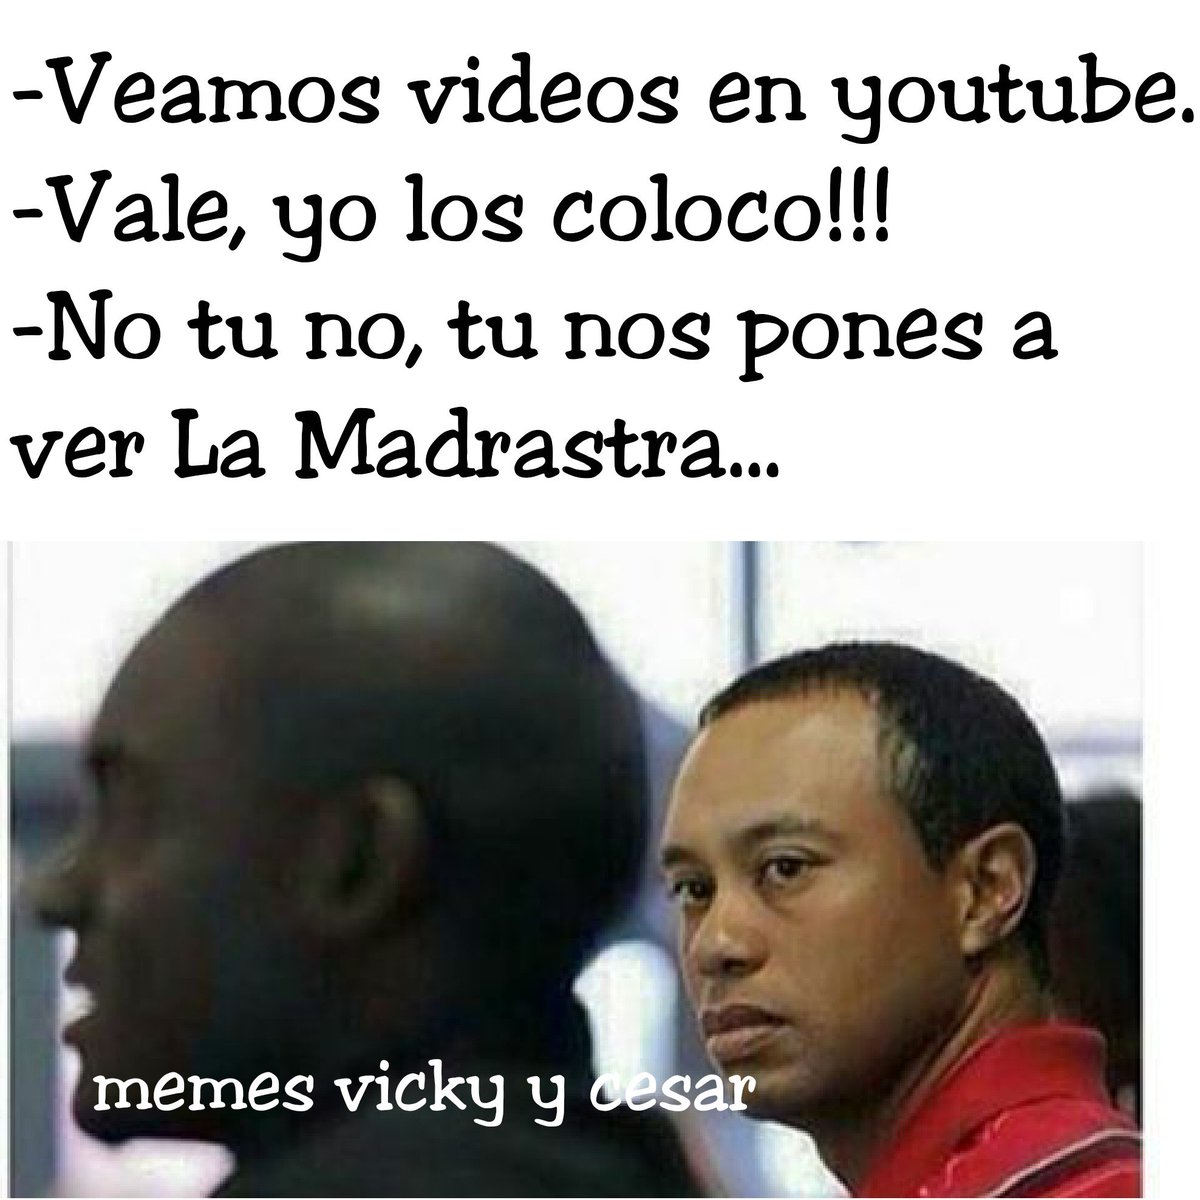 Memes Vicky Y Cesar On Twitter Que Mentira Jajajajajajajajaja